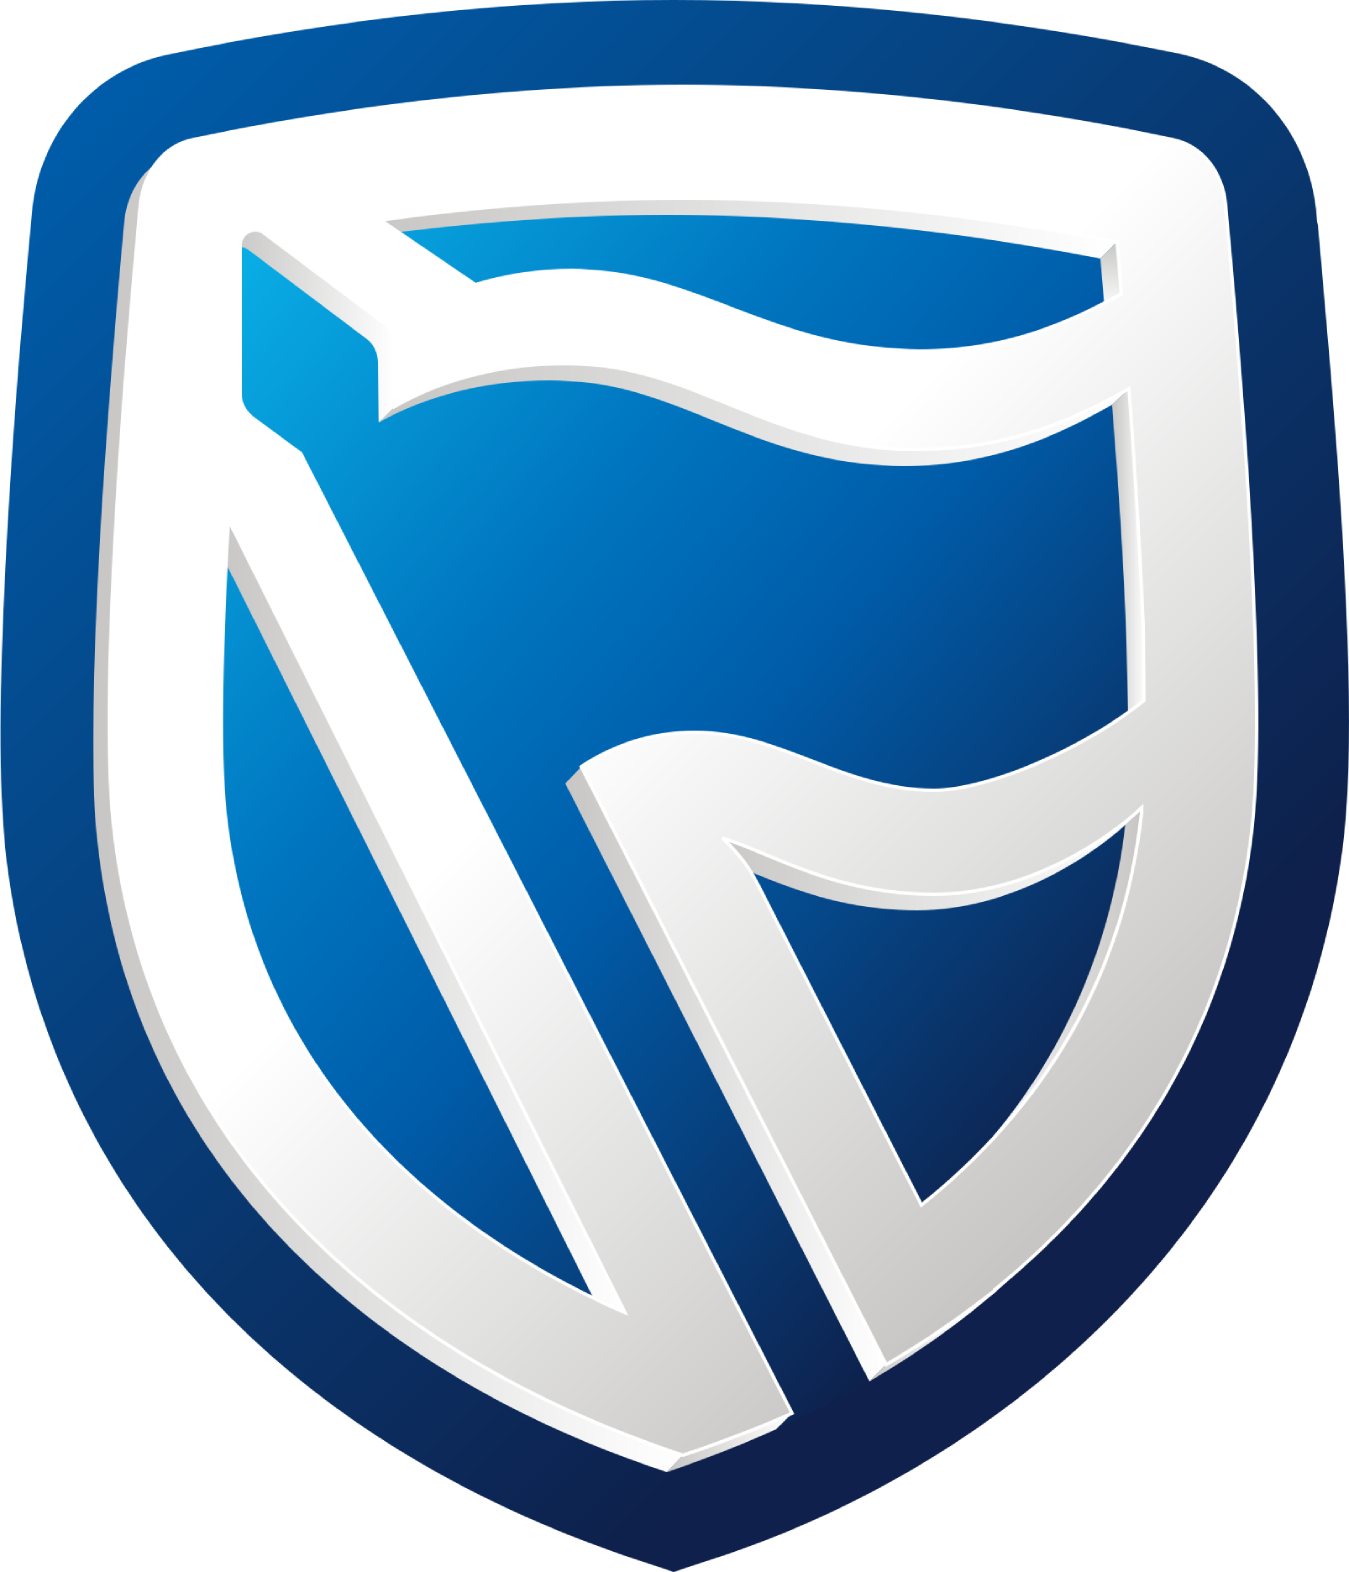 Standard Bank Group logo (PNG transparent)